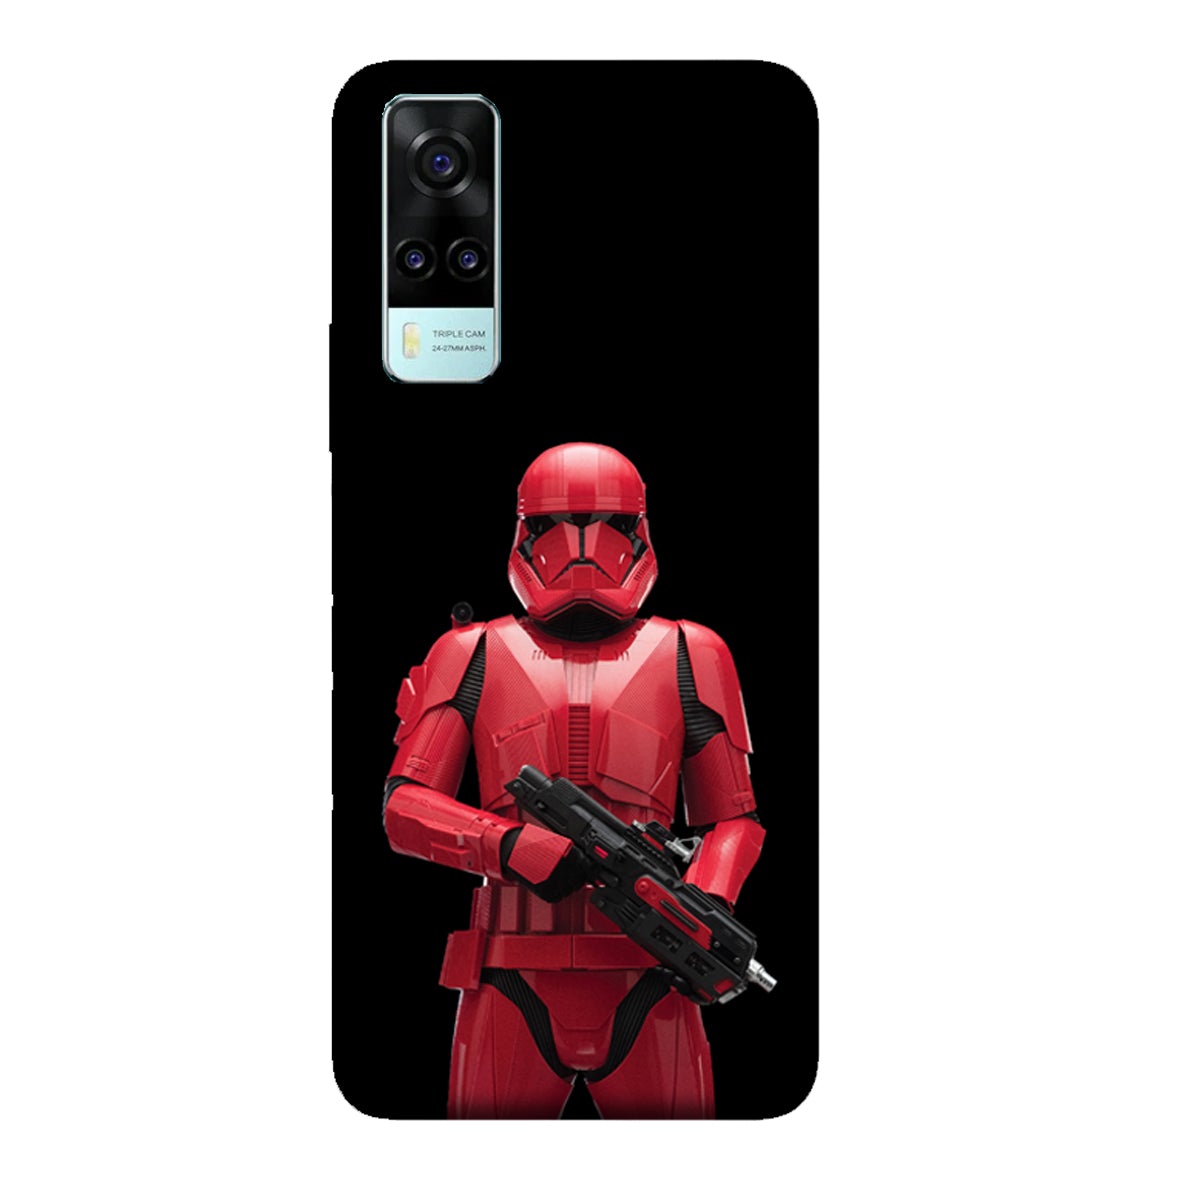 Star Wars - Darth Vader - Red - Mobile Phone Cover - Hard Case - Vivo